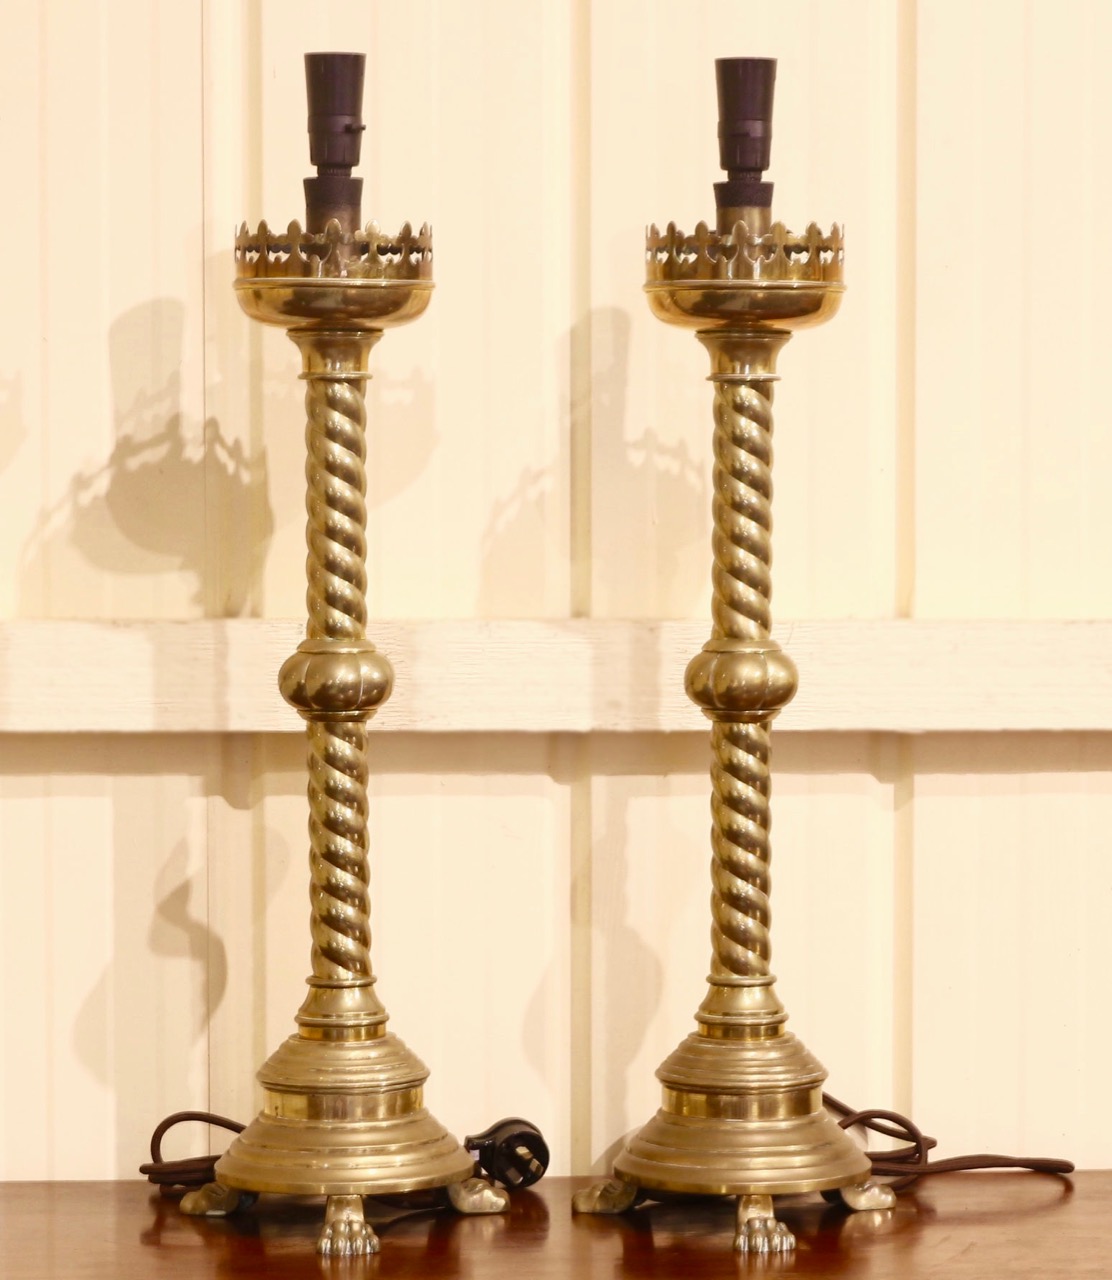 Pair of Gothic brass candlesticks